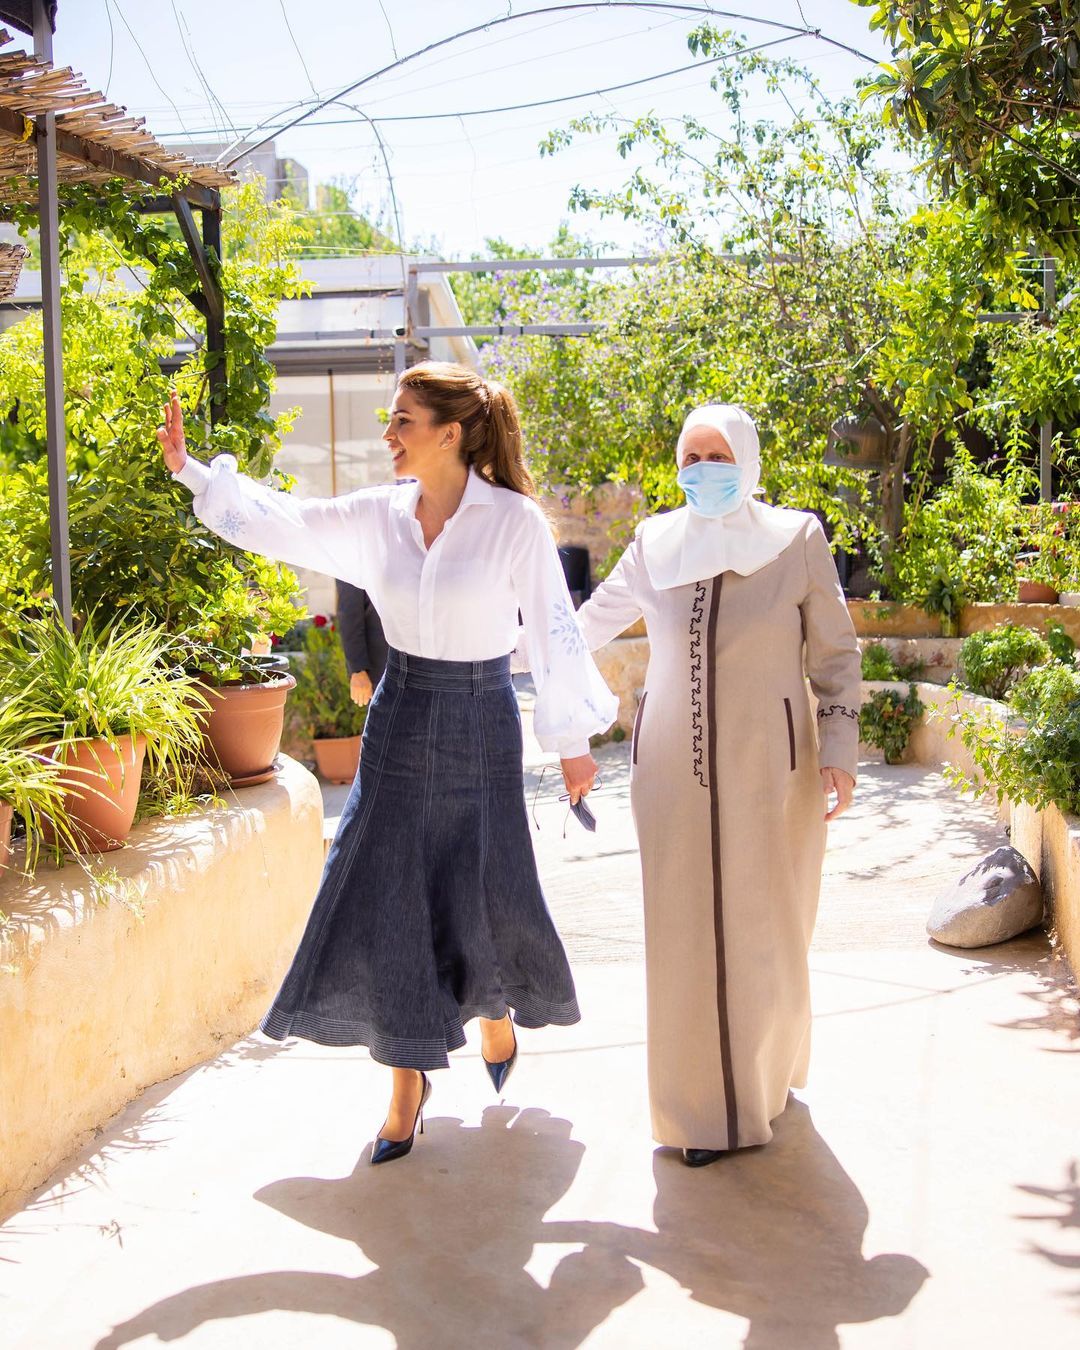 Earlier she visited Beit Khairat Souf in Jerash on July 26th.